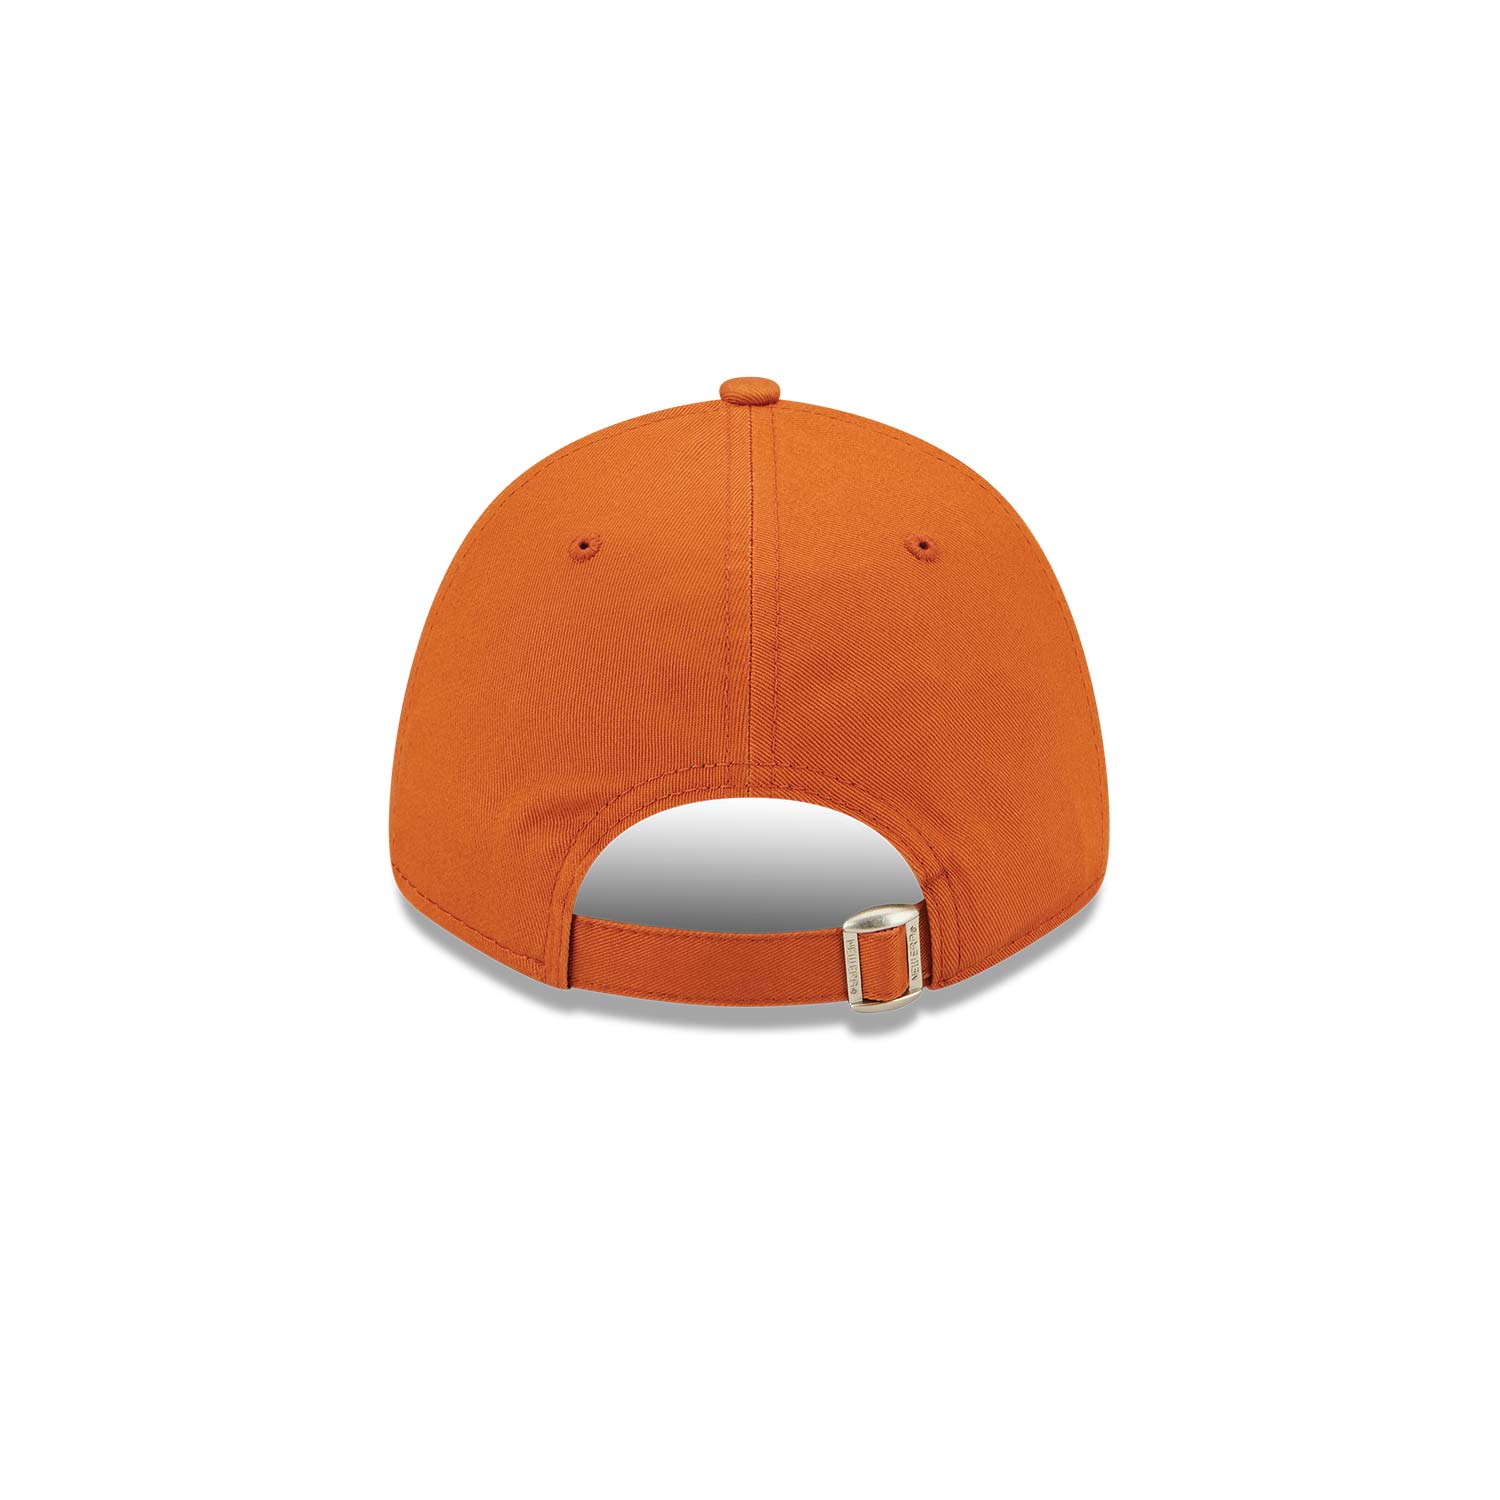 New York Yankees League Essentials Dark Orange 9FORTY Adjustable Cap